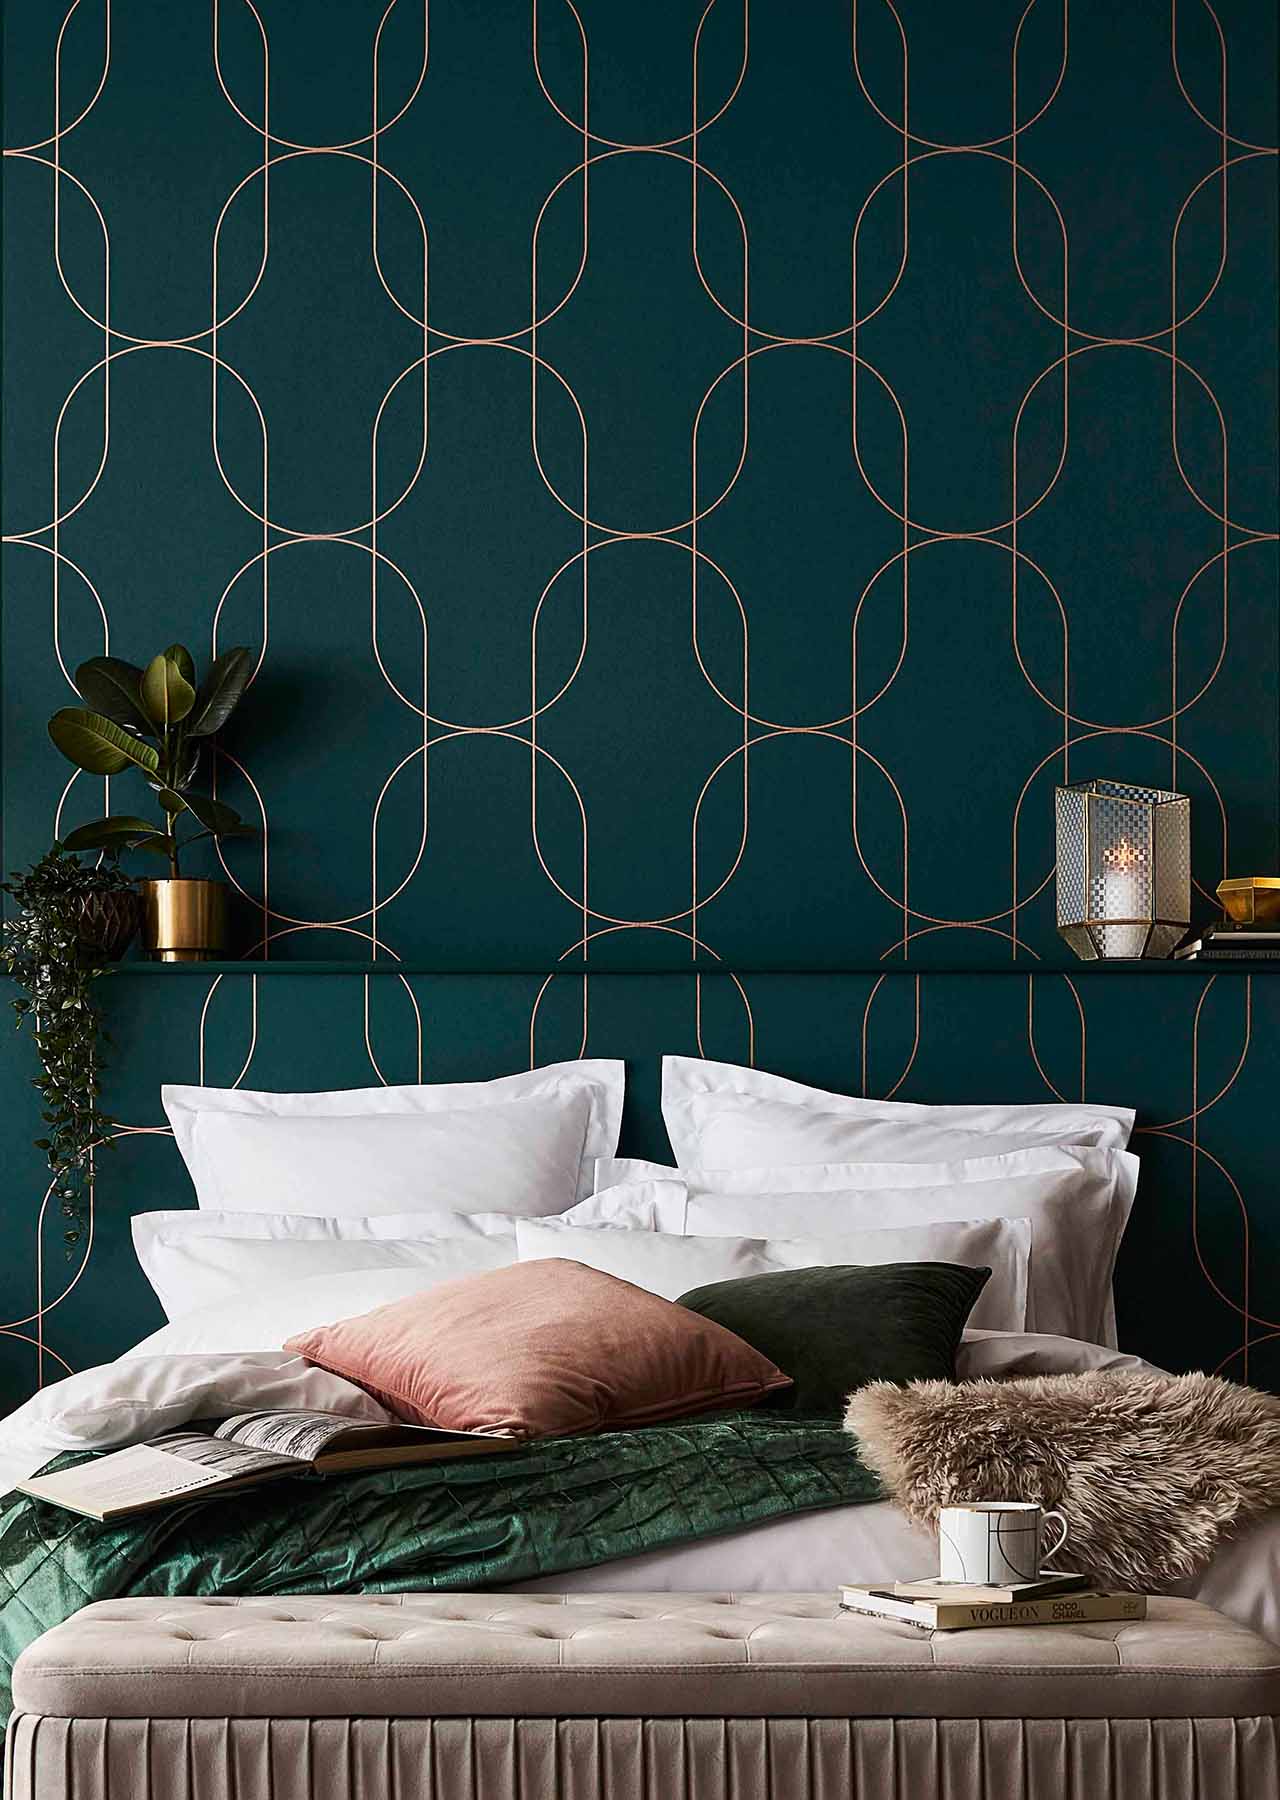 Bedroom Wallpaper Designs for Your Next Bedroom Makeover  Beautiful Homes